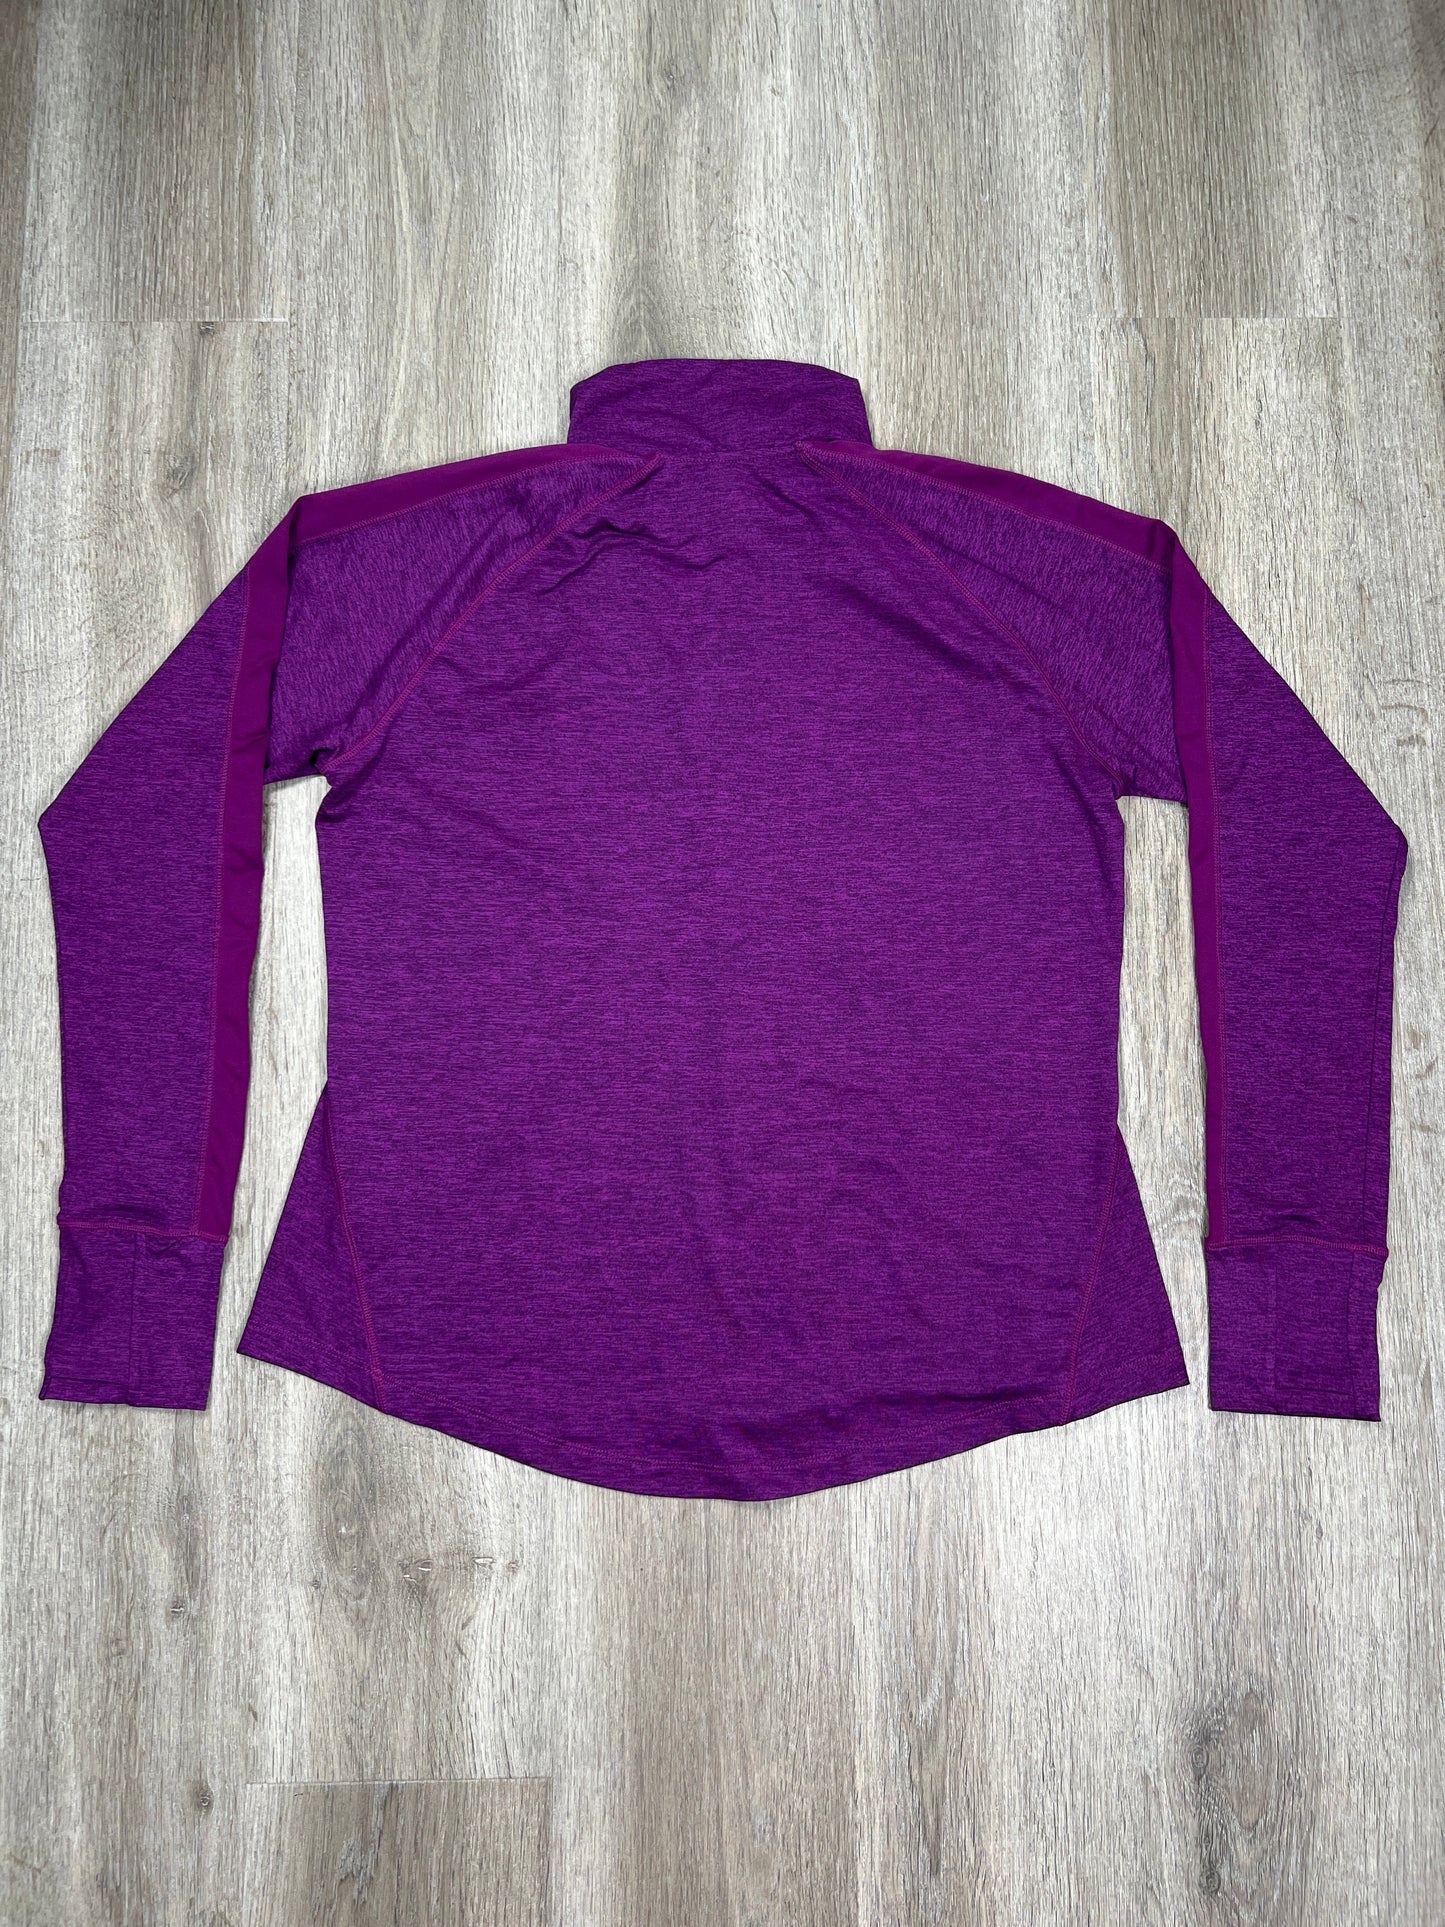 Purple Athletic Top Long Sleeve Collar Brooks, Size L